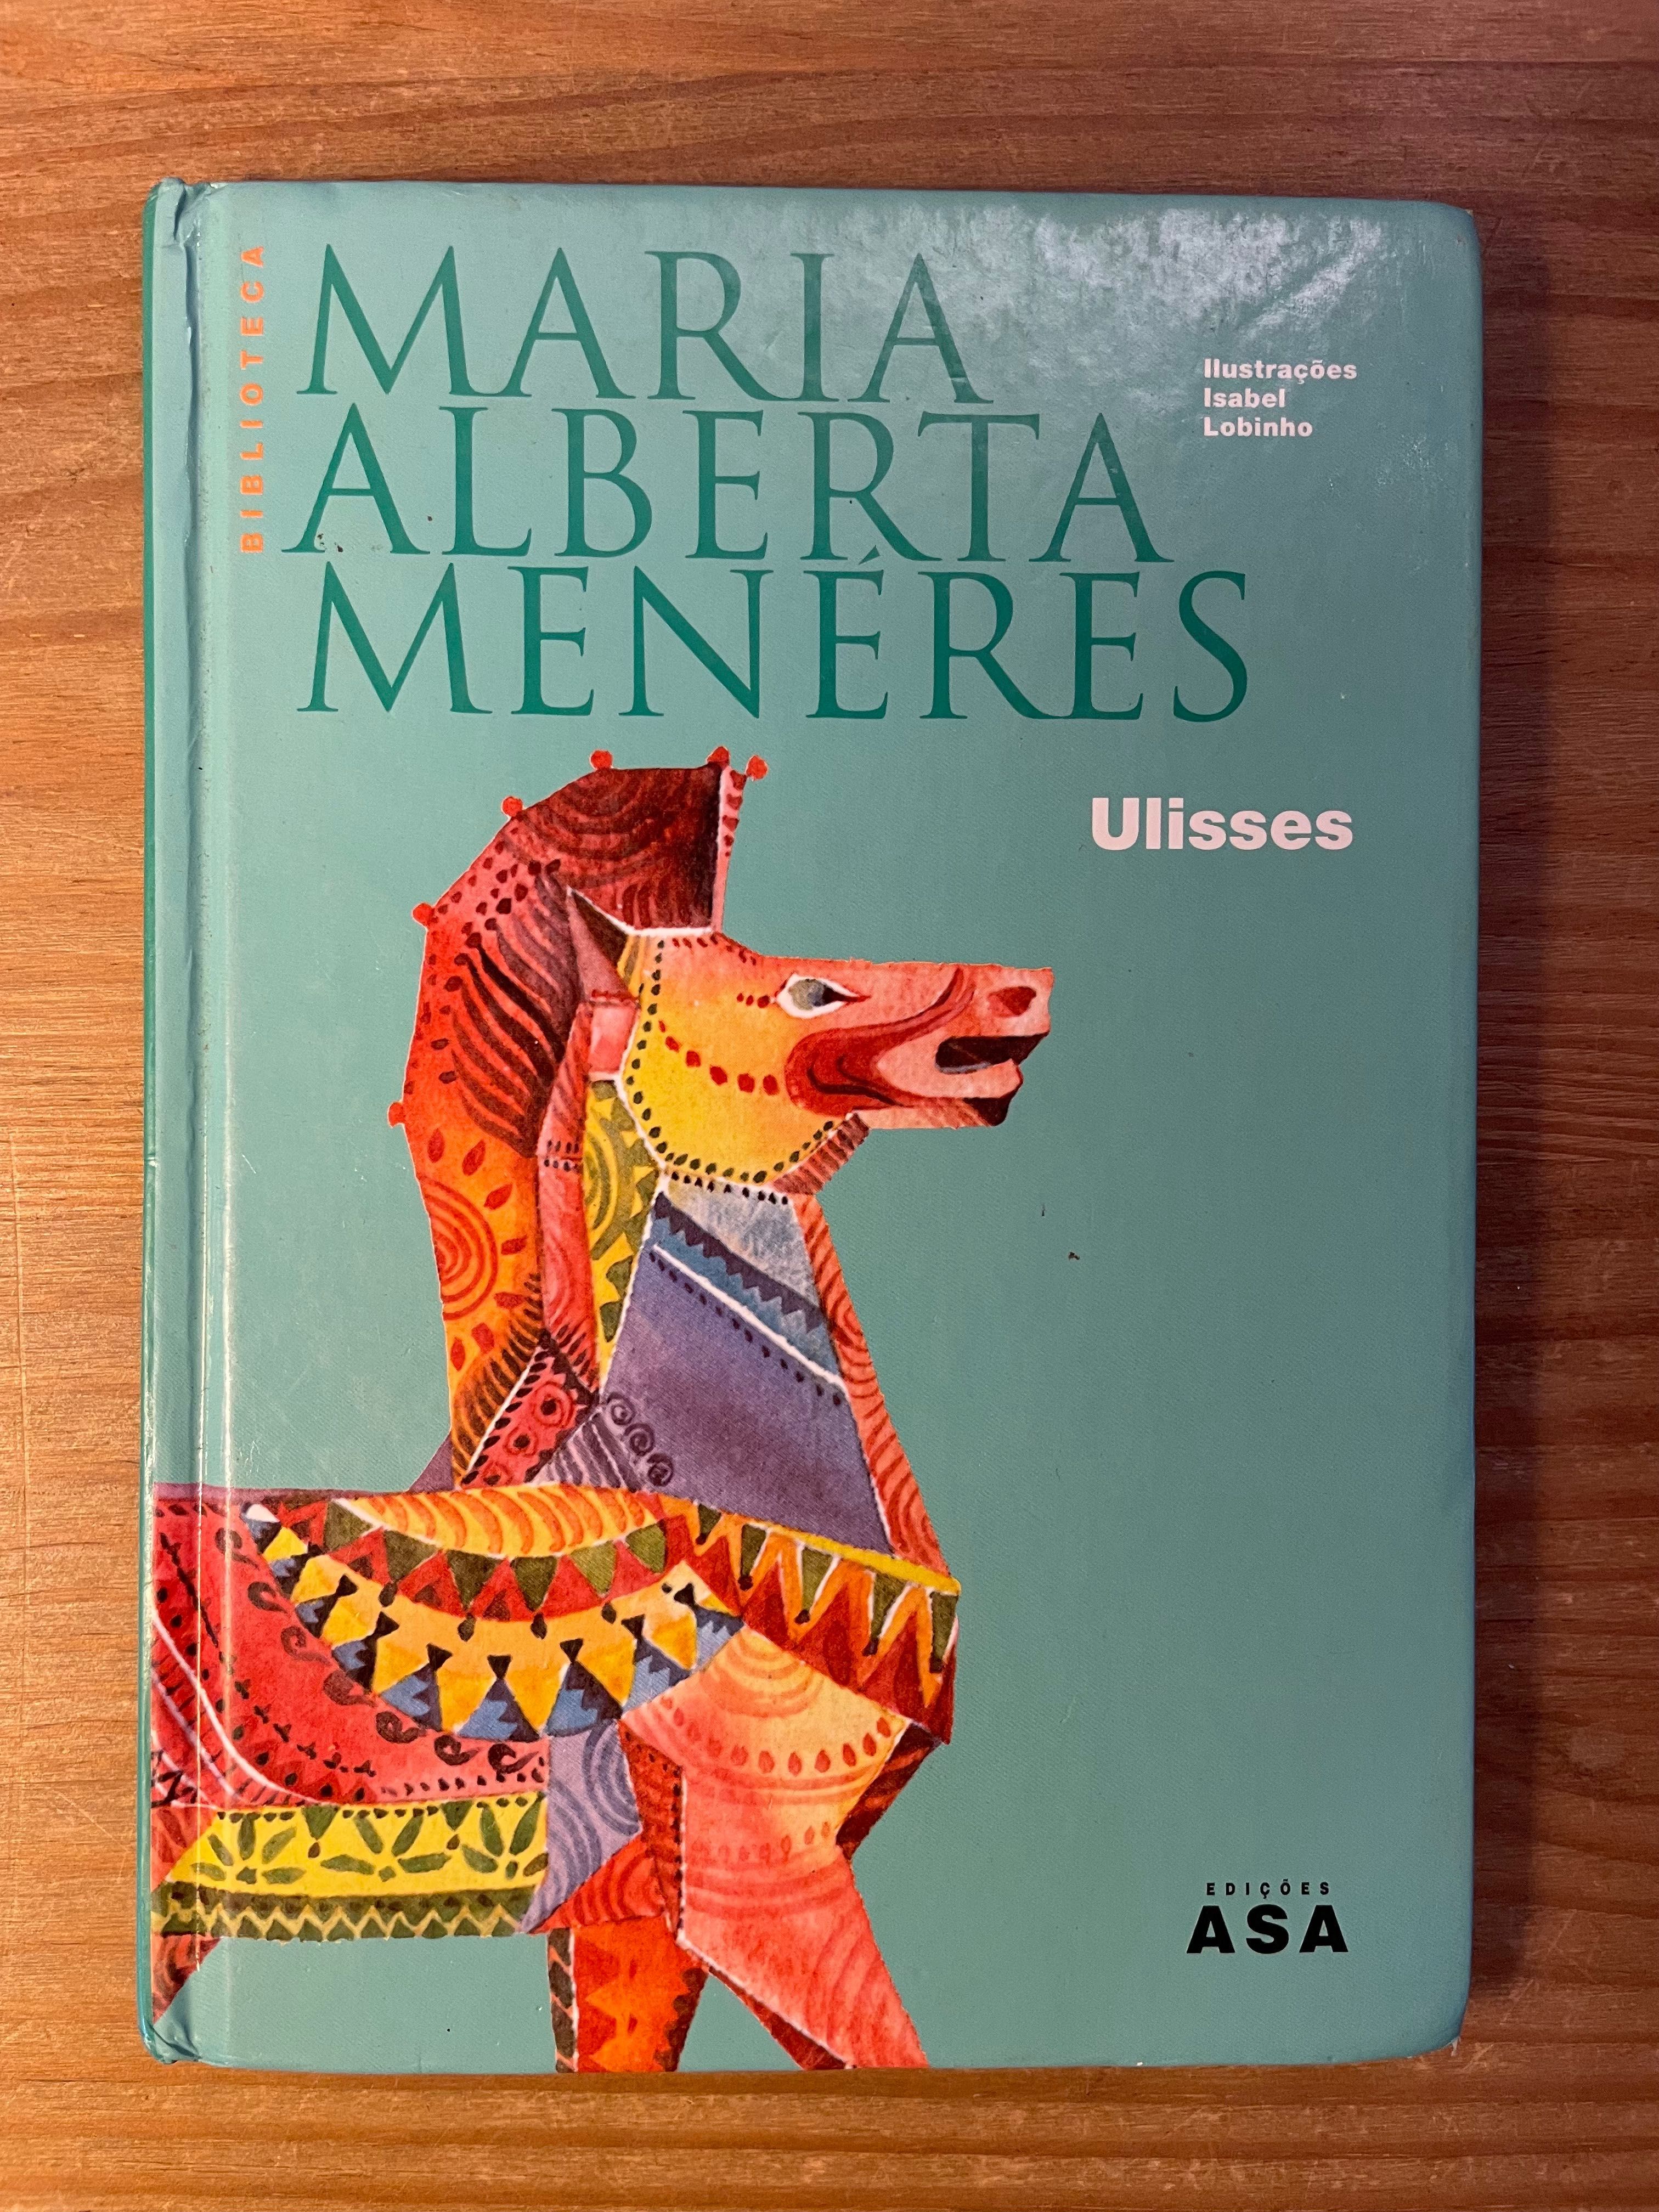 Ulisses - Maria Alberta Meneres (portes grátis)